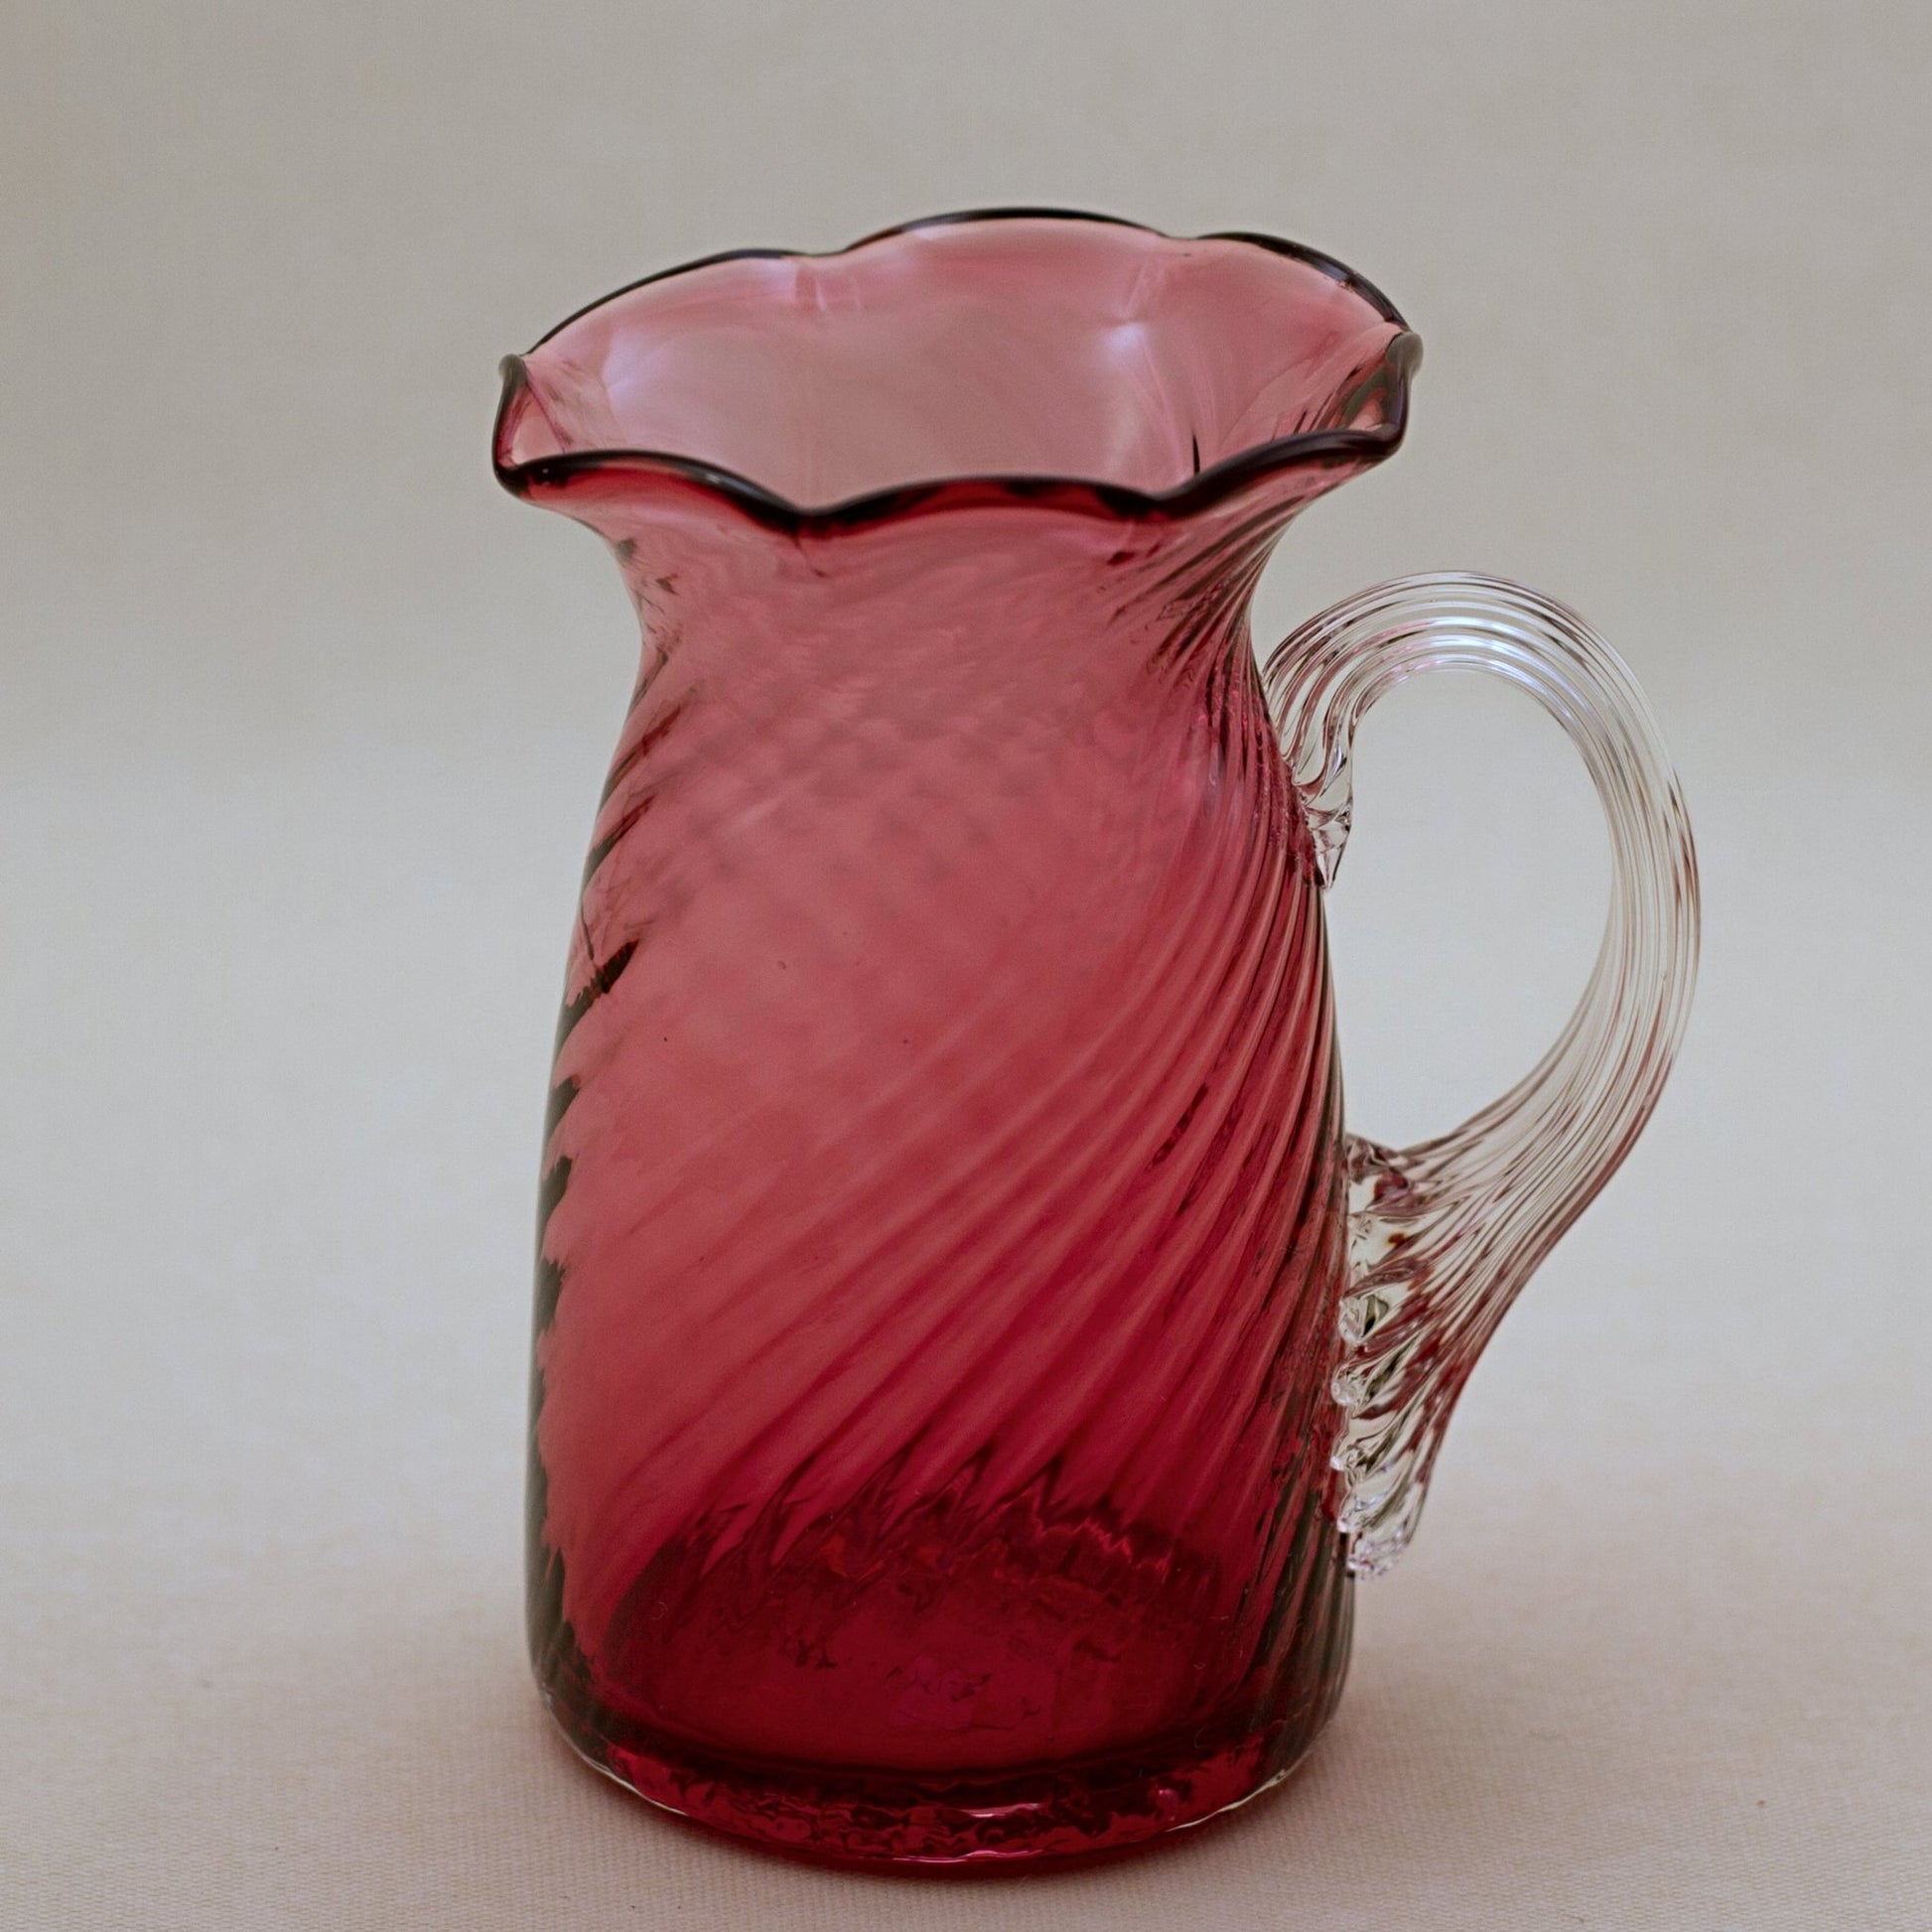 PILGRIM CRANBERRY GLASS Ruffled Rim Pitcher with Optic Swirl